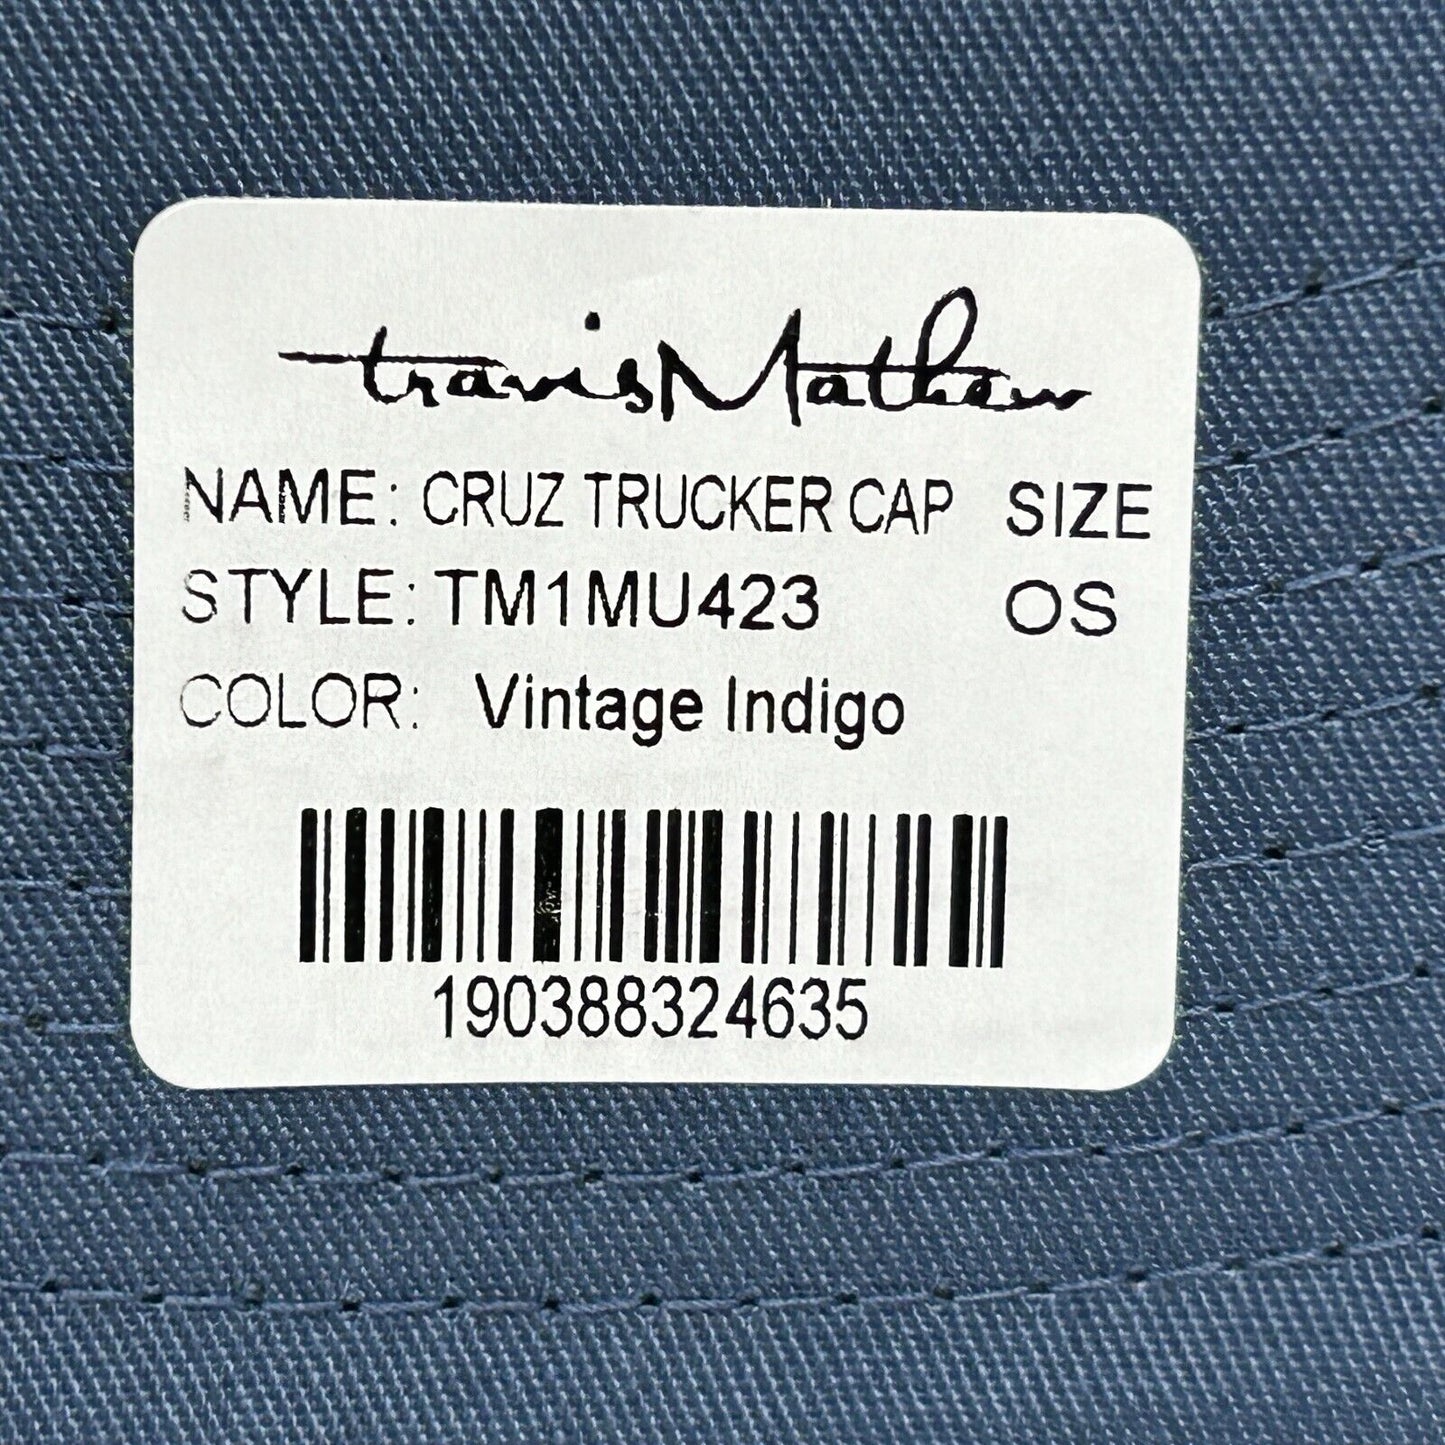 ReliaQuest Travis Mathew Cruz Trucker Hat Blue Unisex Mesh Snapback Baseball Cap